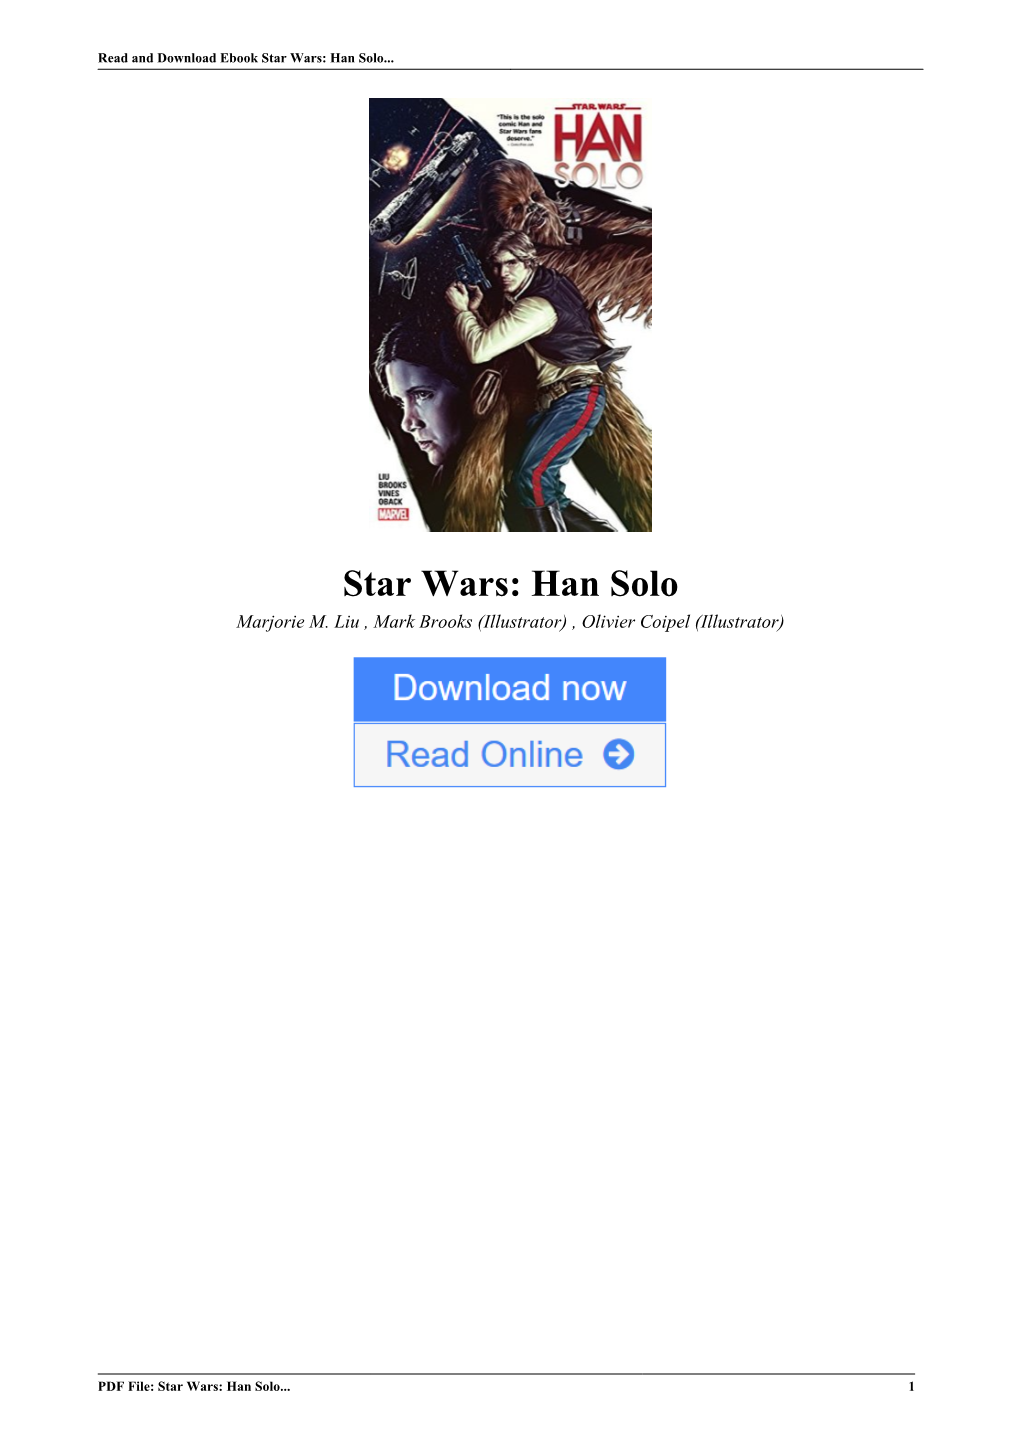 Star Wars: Han Solo by Marjorie M. Liu , Mark Brooks (Illustrator)